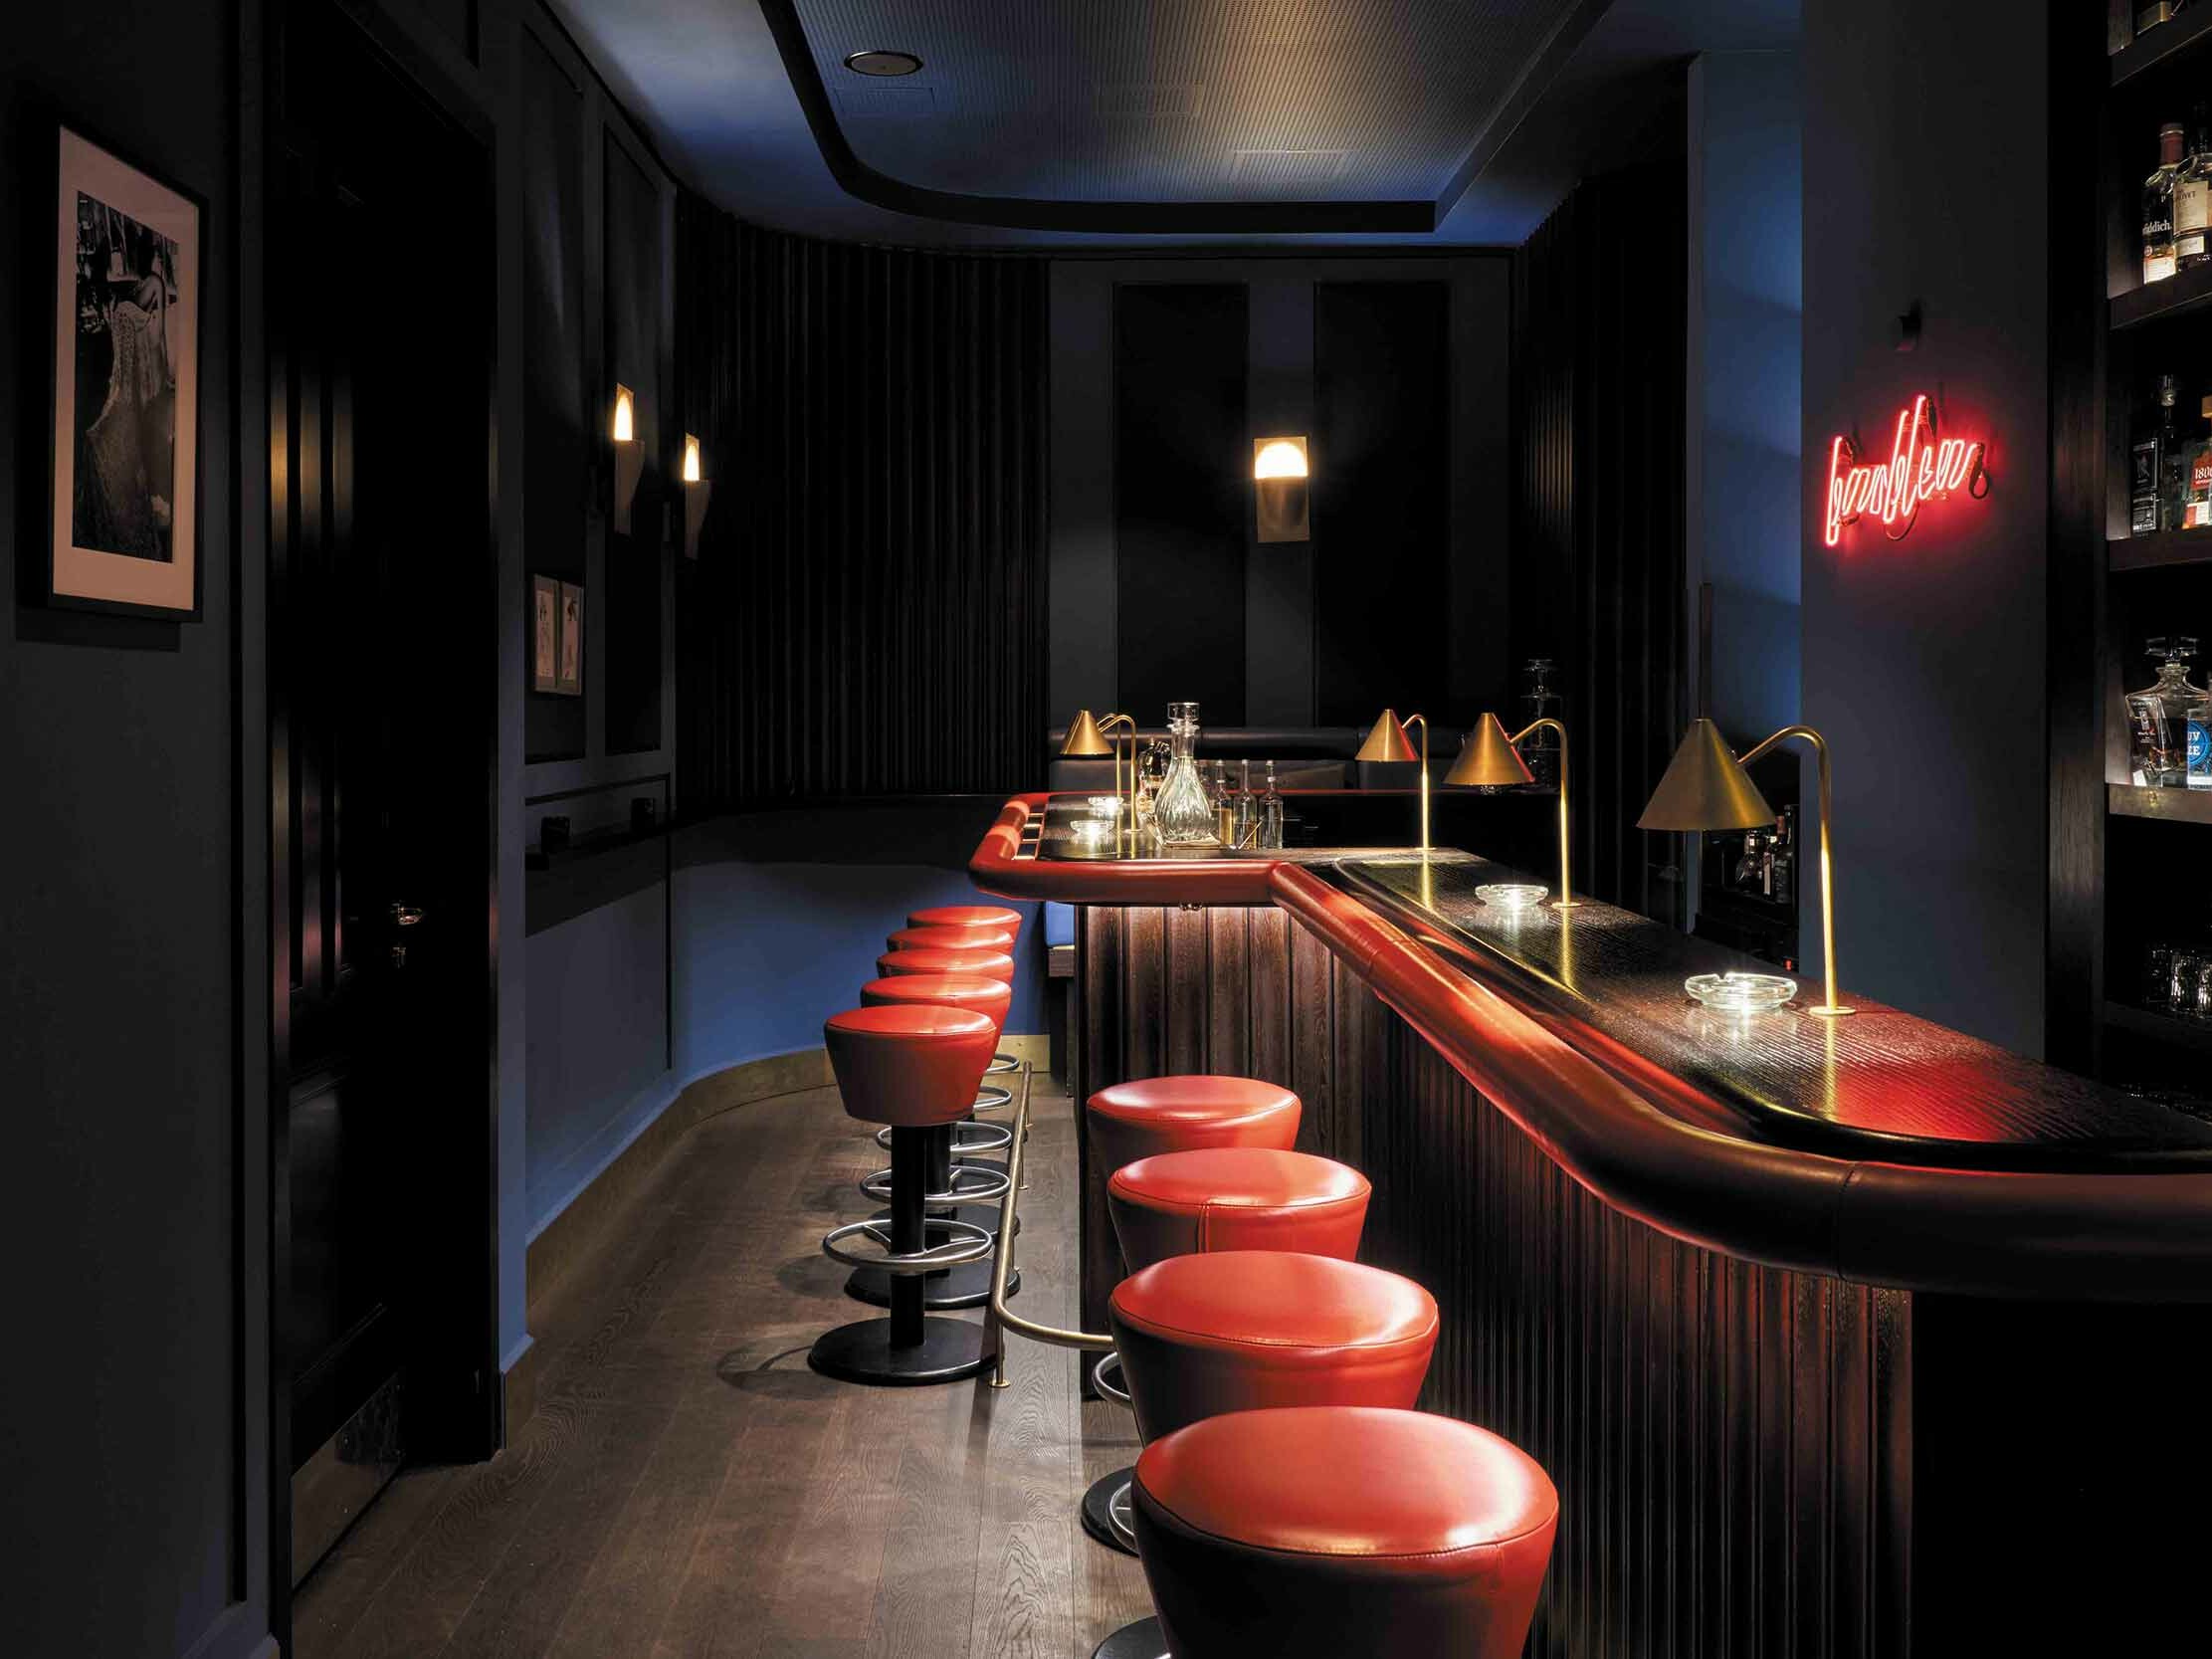 bar bleu hamburg at hotel tortue finest drirnks whisky scotch and cigars gentleman style